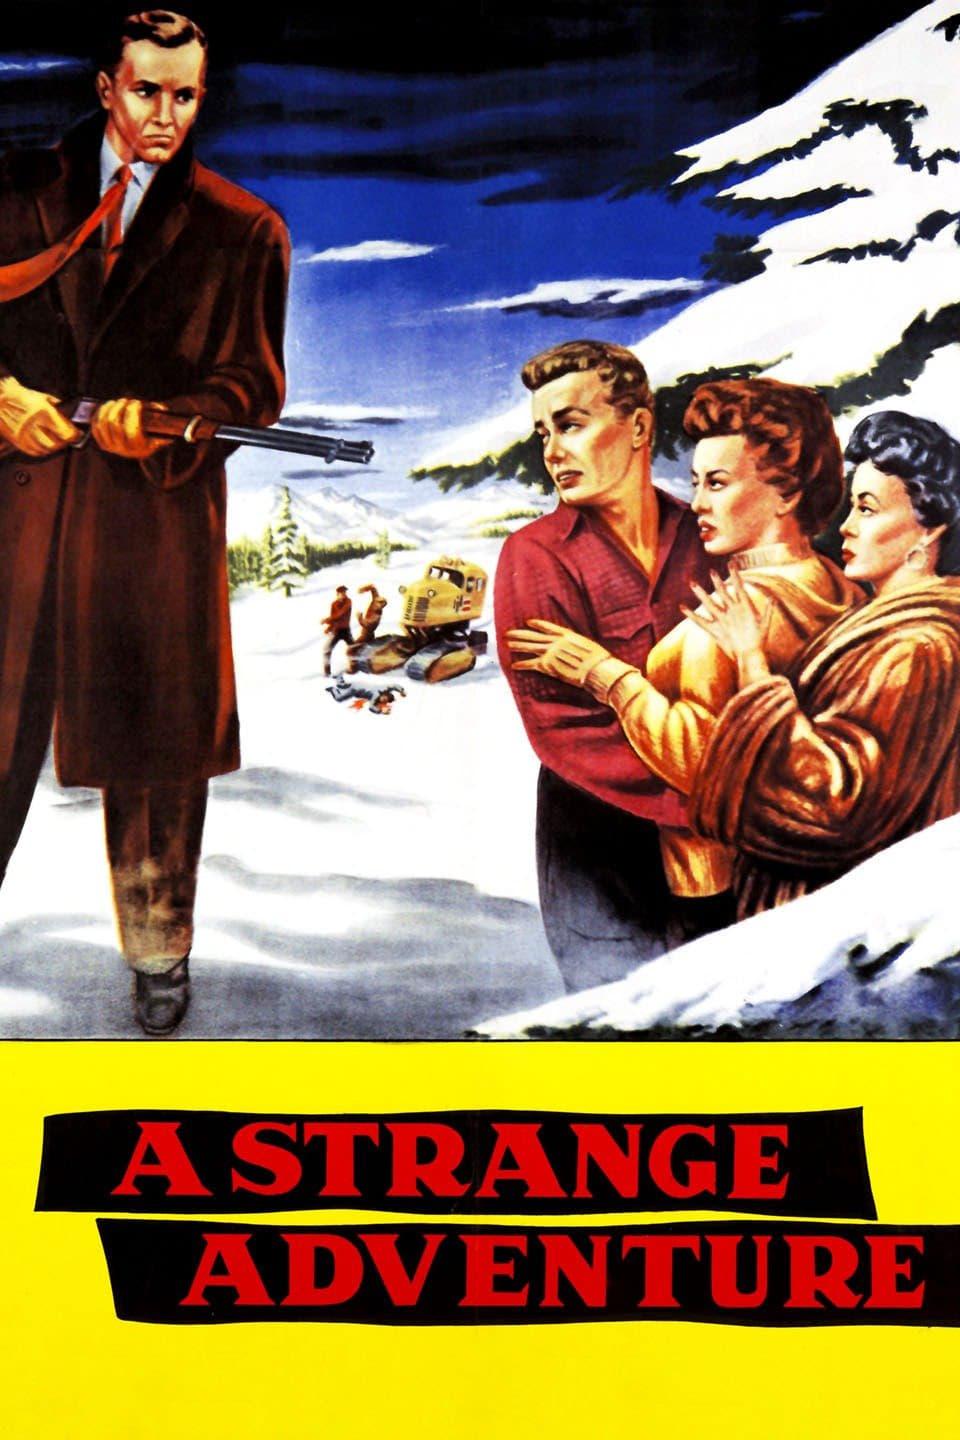 A Strange Adventure poster